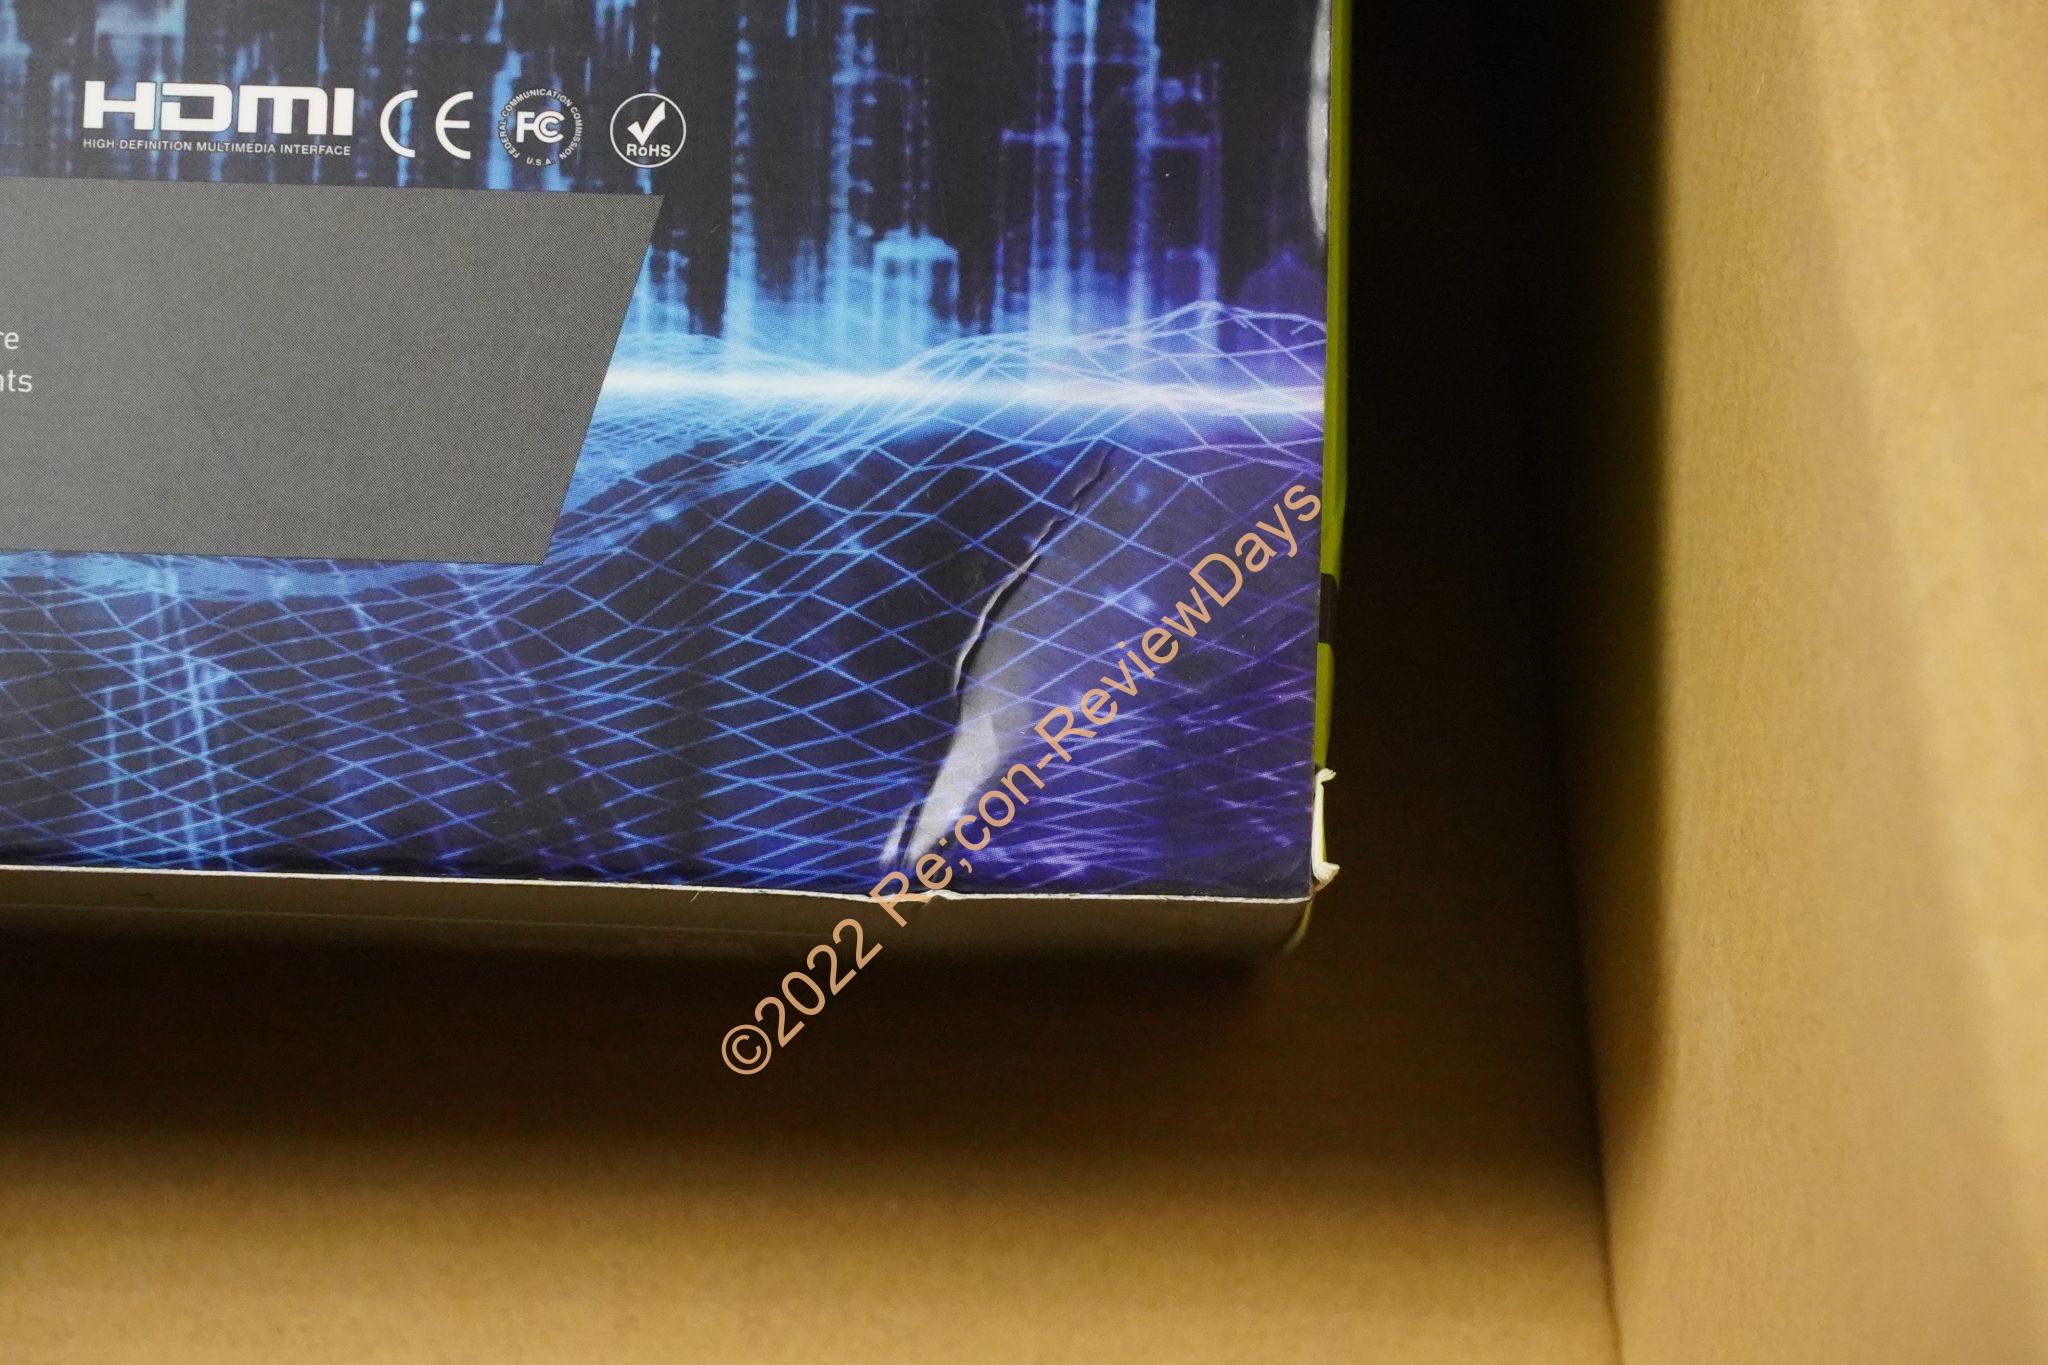 AmazonでGALAKURO製のGeForce RTX 3090を購入したら箱に打痕がある状態で届いたお話 #Amazon #GALAKURO #GALAX #玄人志向 #RTX3090